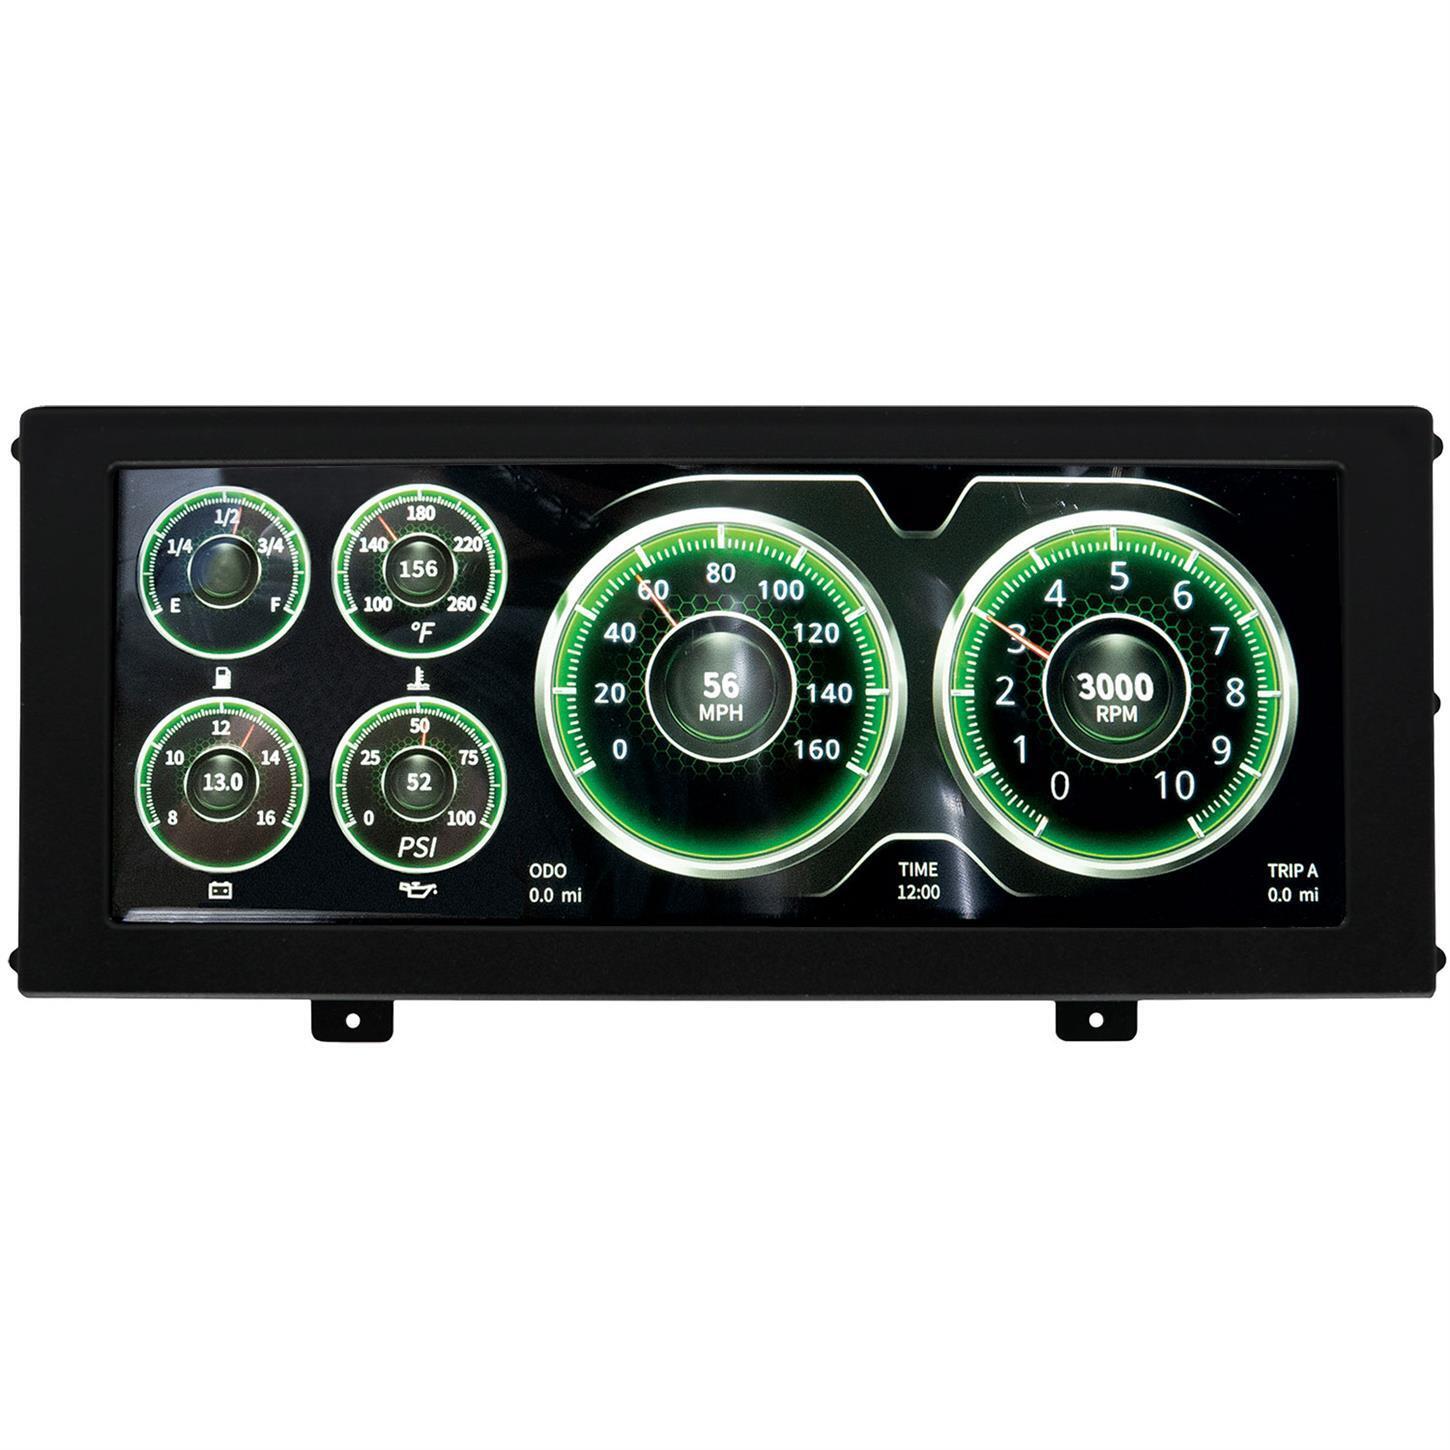 Auto Meter 7000 Invision LCD Dash Panel Mount, Universal